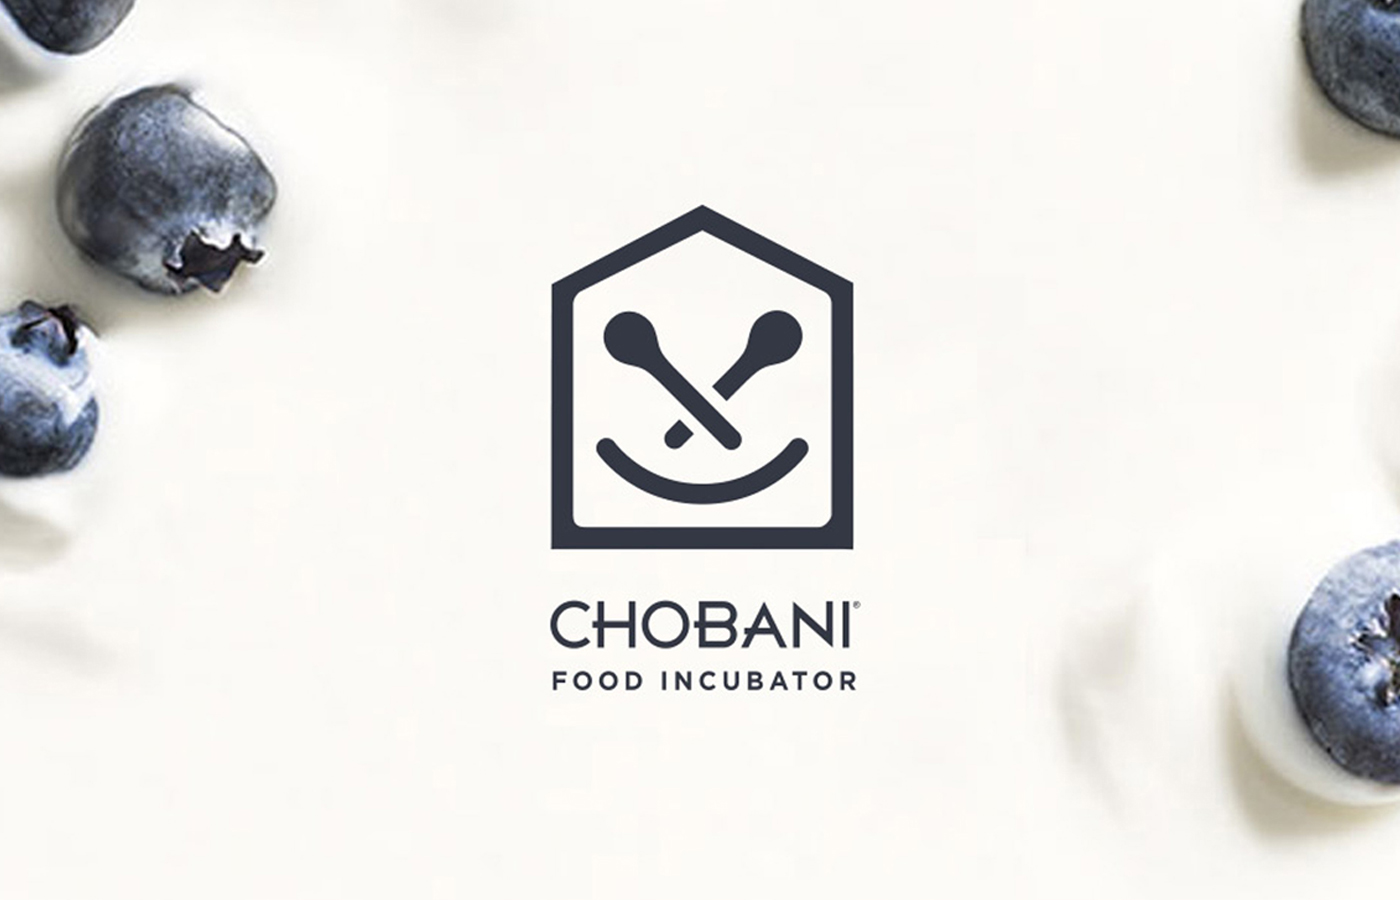 Chobani Food Incubator